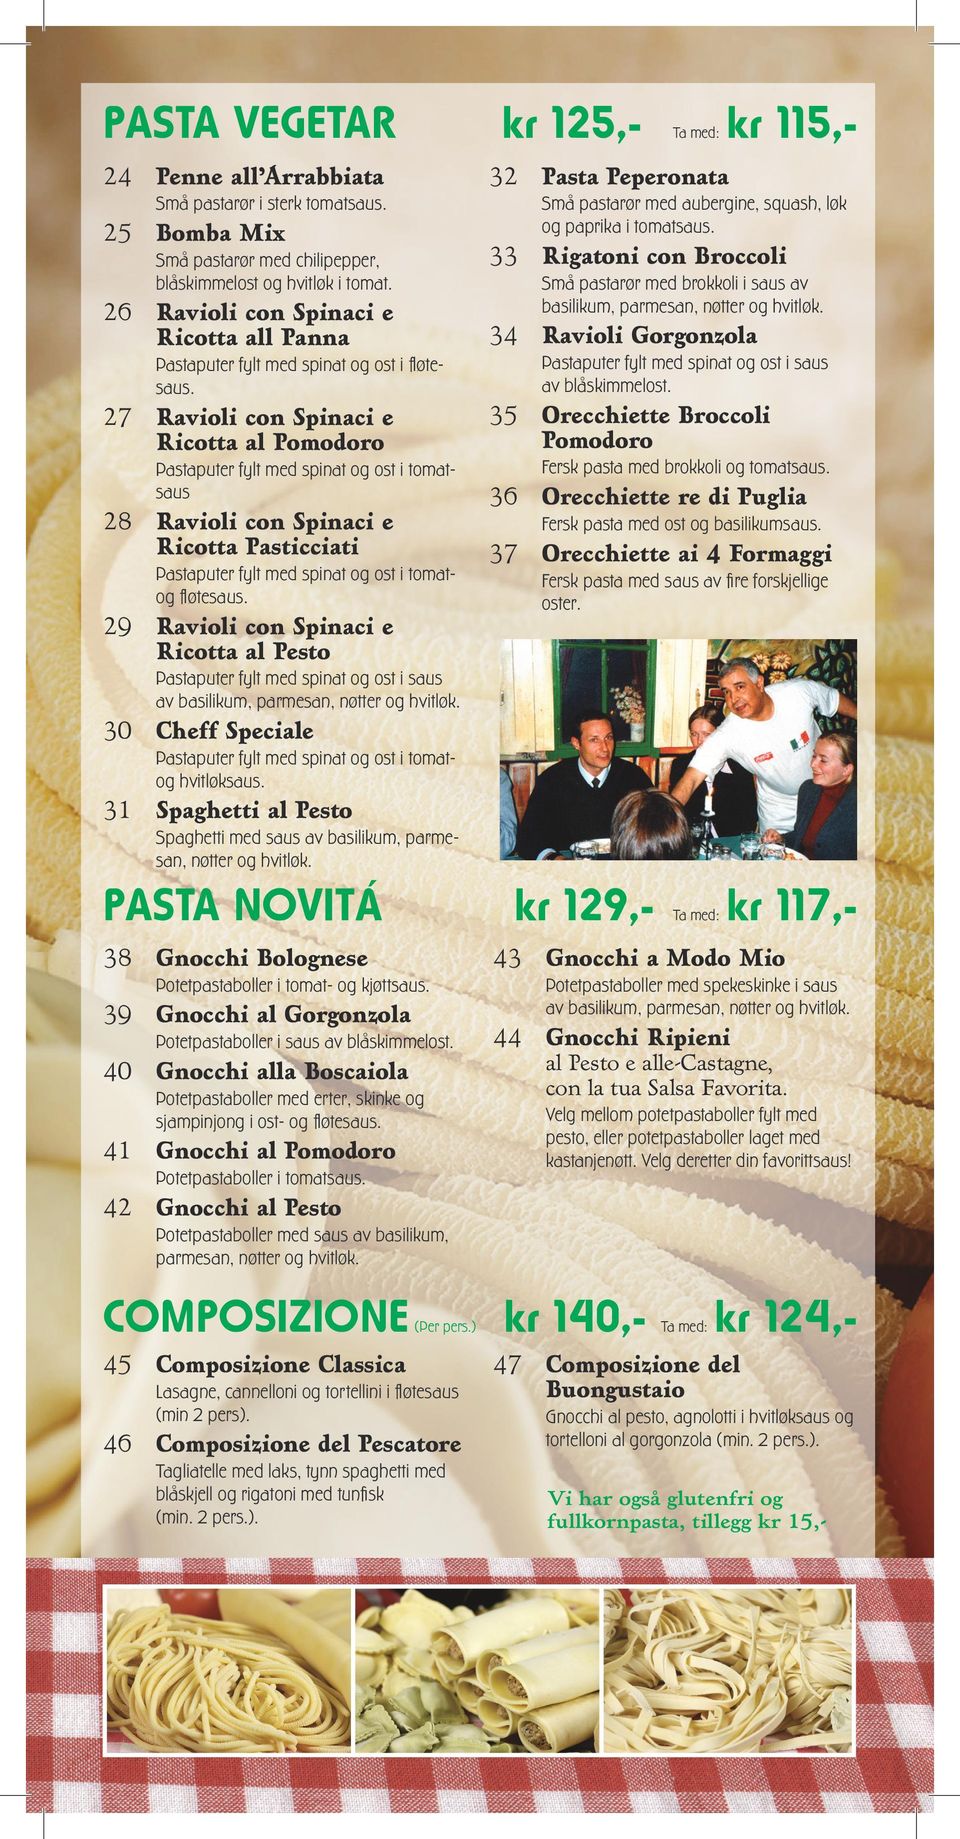 26 Ravioli con Spinaci e Ricotta all Panna 34 Ravioli Gorgonzola Pastaputer fylt med spinat og ost i s aus av blåskimmelost. Pastaputer fylt med spinat og ost i fløtesaus.